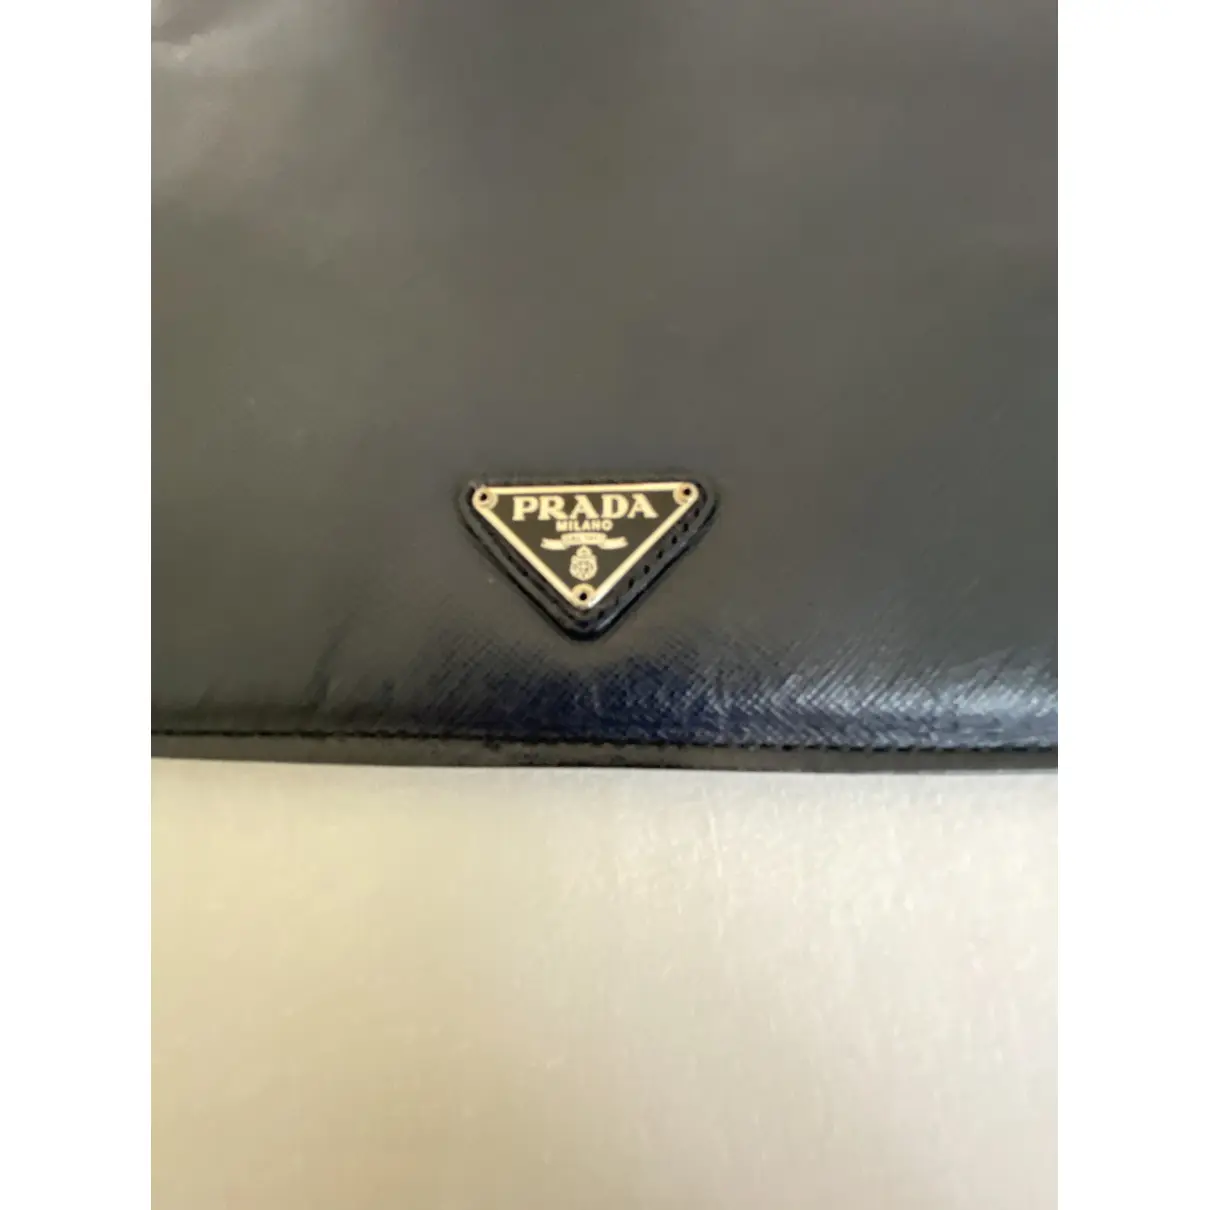 Leather ipad case Prada